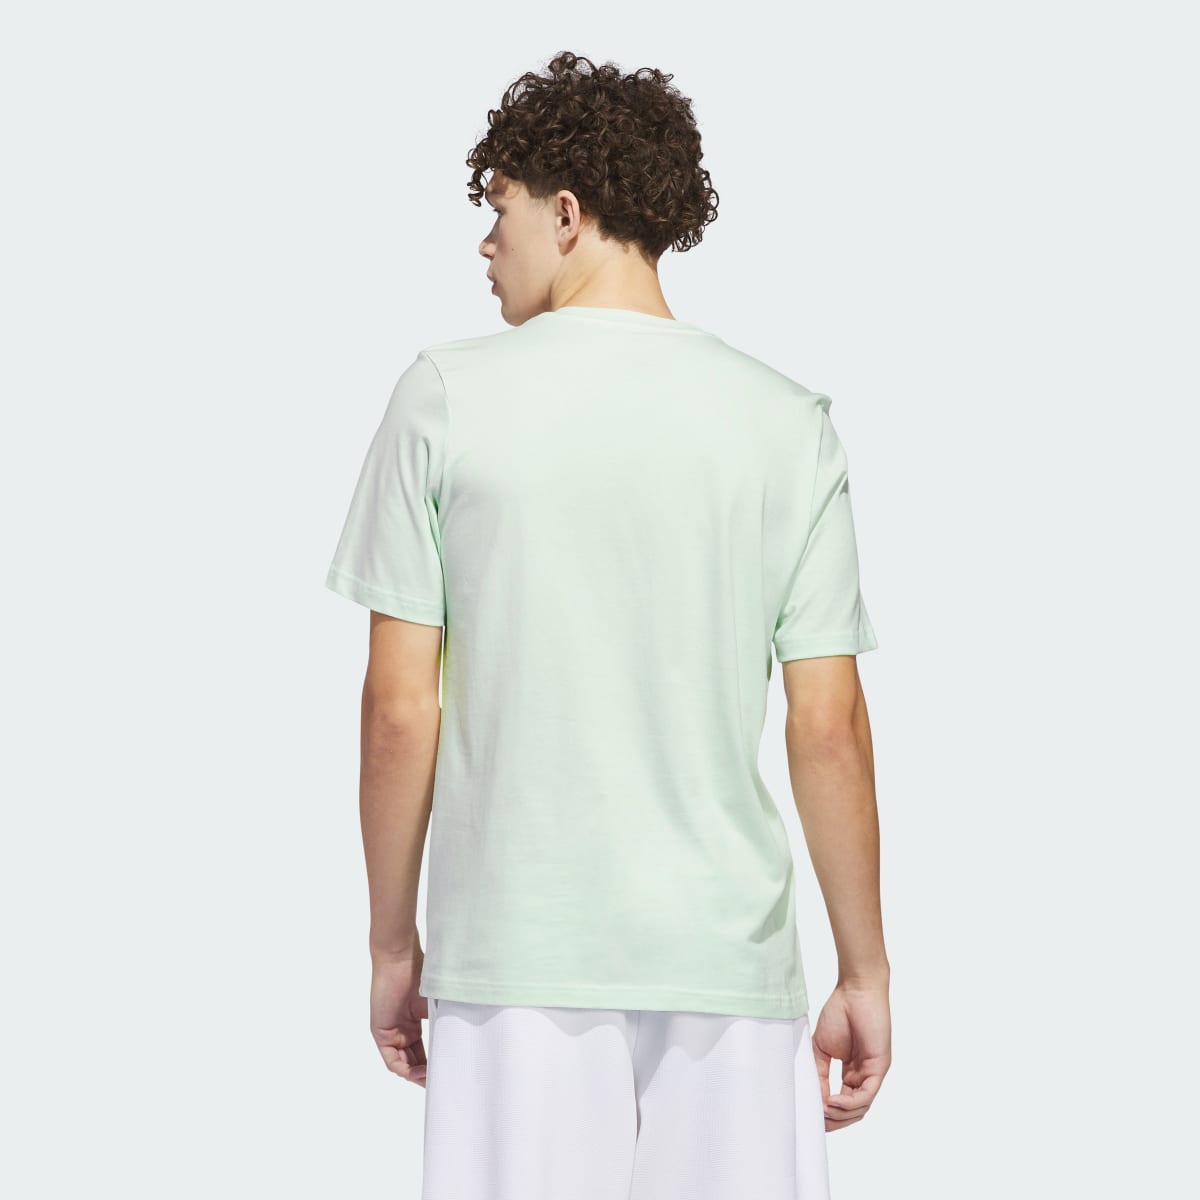 Adidas x Malbon Graphic T-Shirt. 5